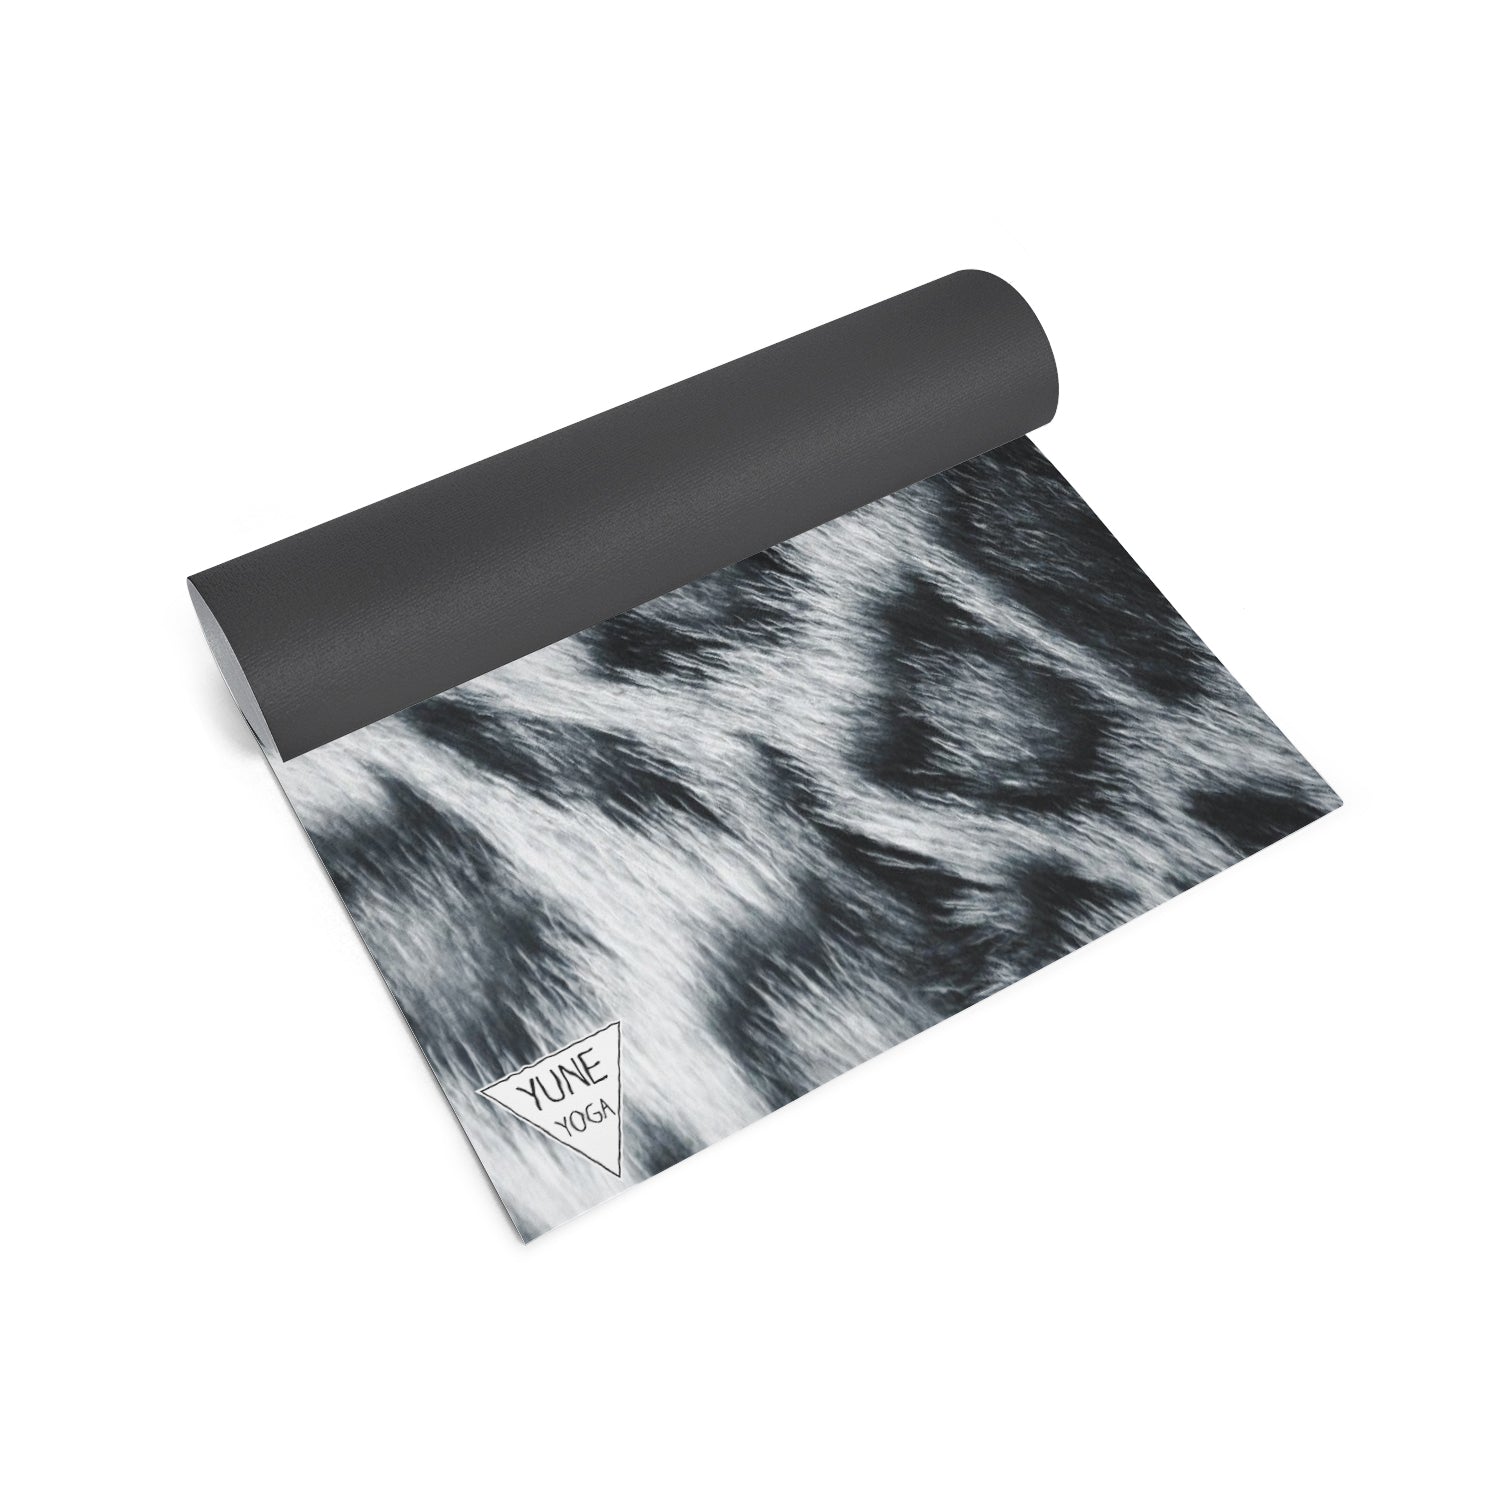 Yune Yoga Mat The Snow Leopard 5mm